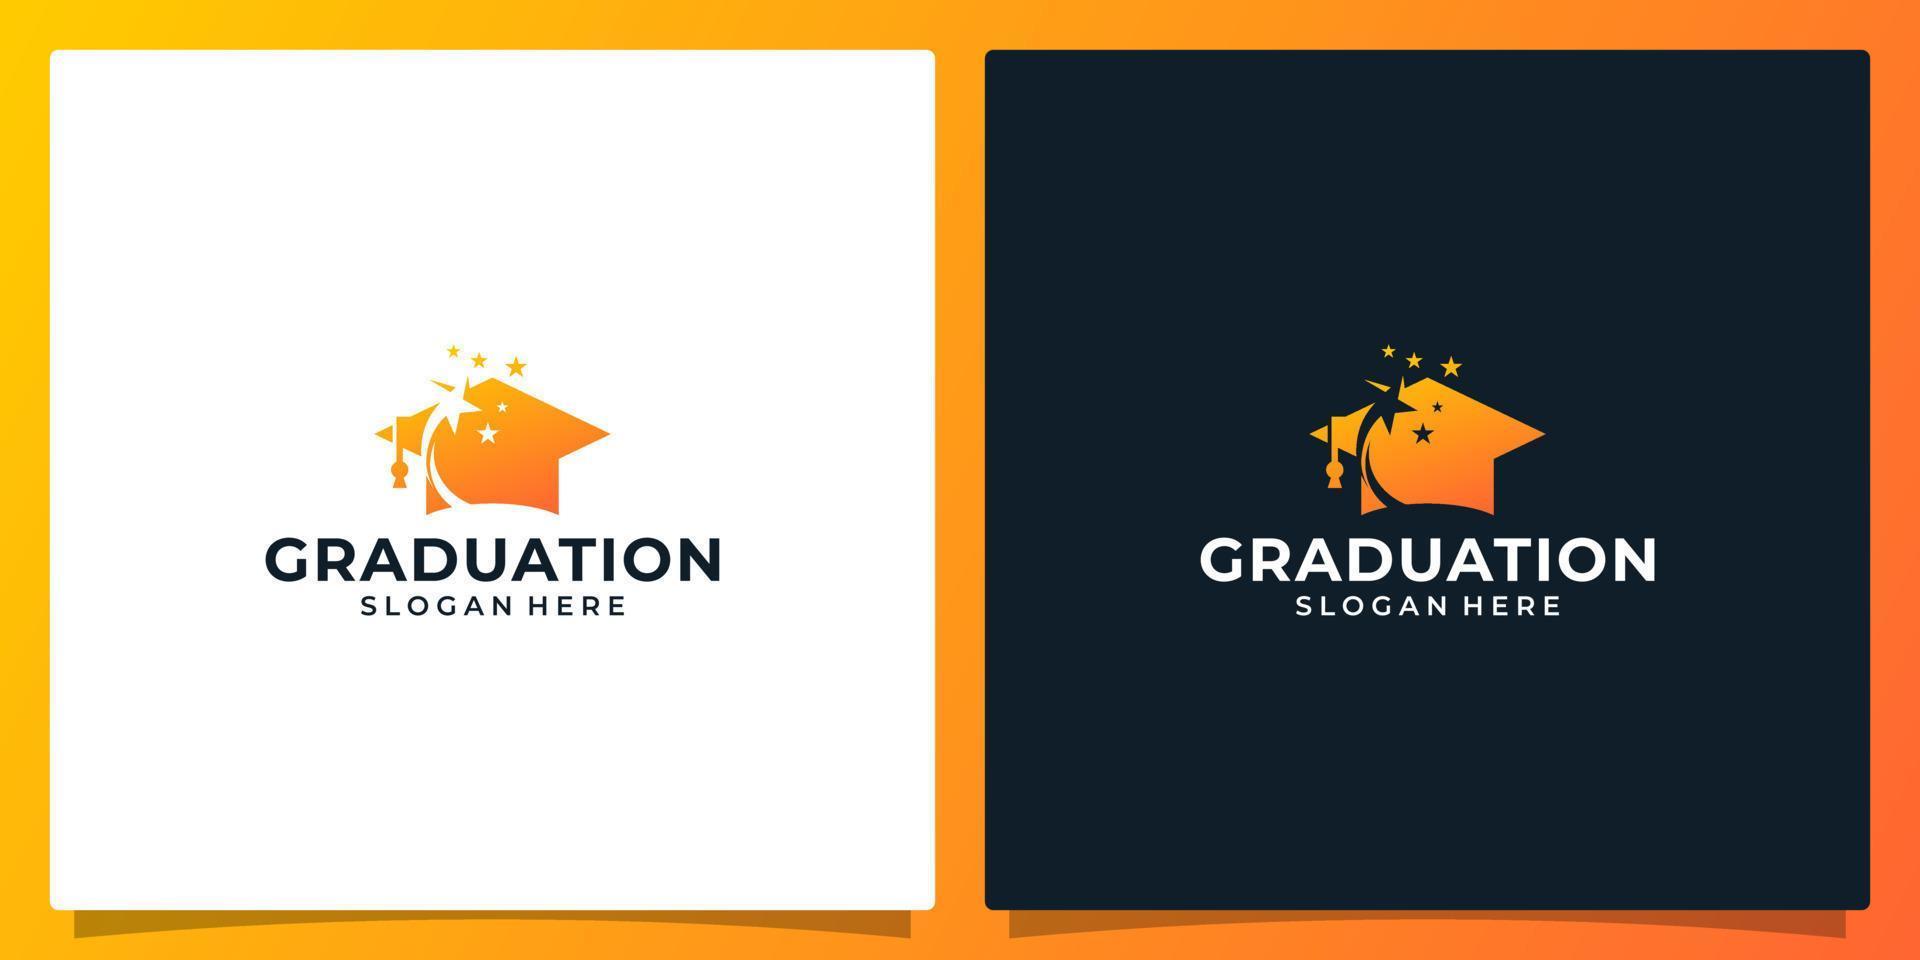 College, Graduation cap, Campus, Education logo design and fireworks as a symbol of celebration of success illustration graphic design. vector